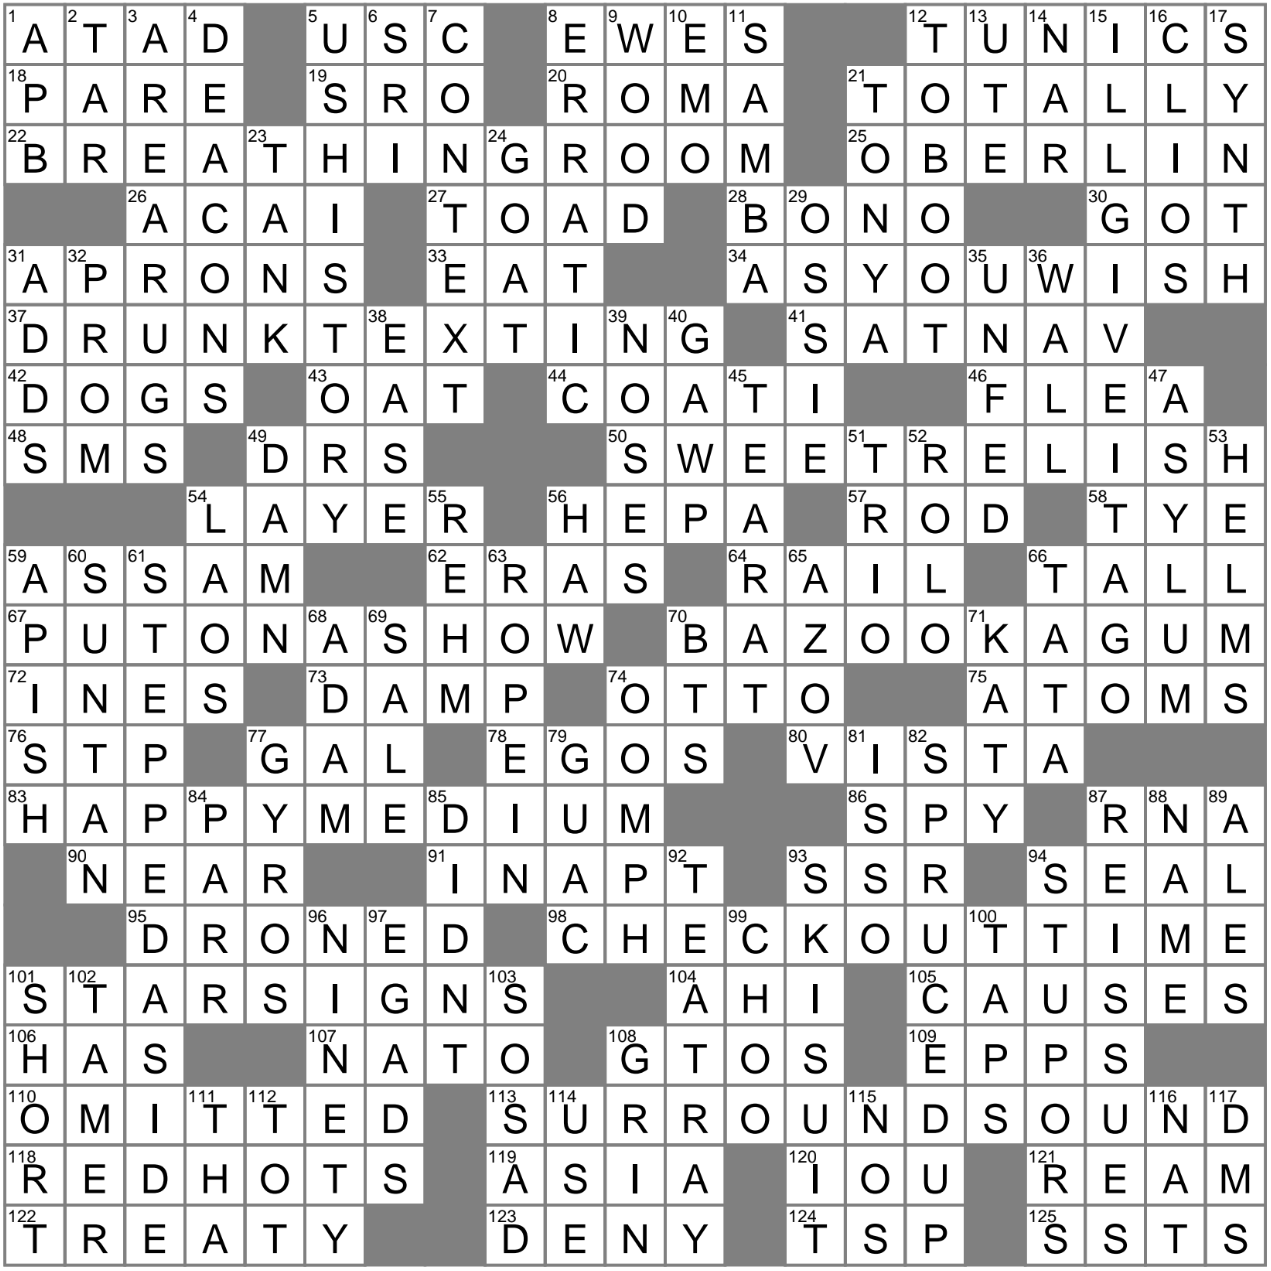 visit briefly crossword clue